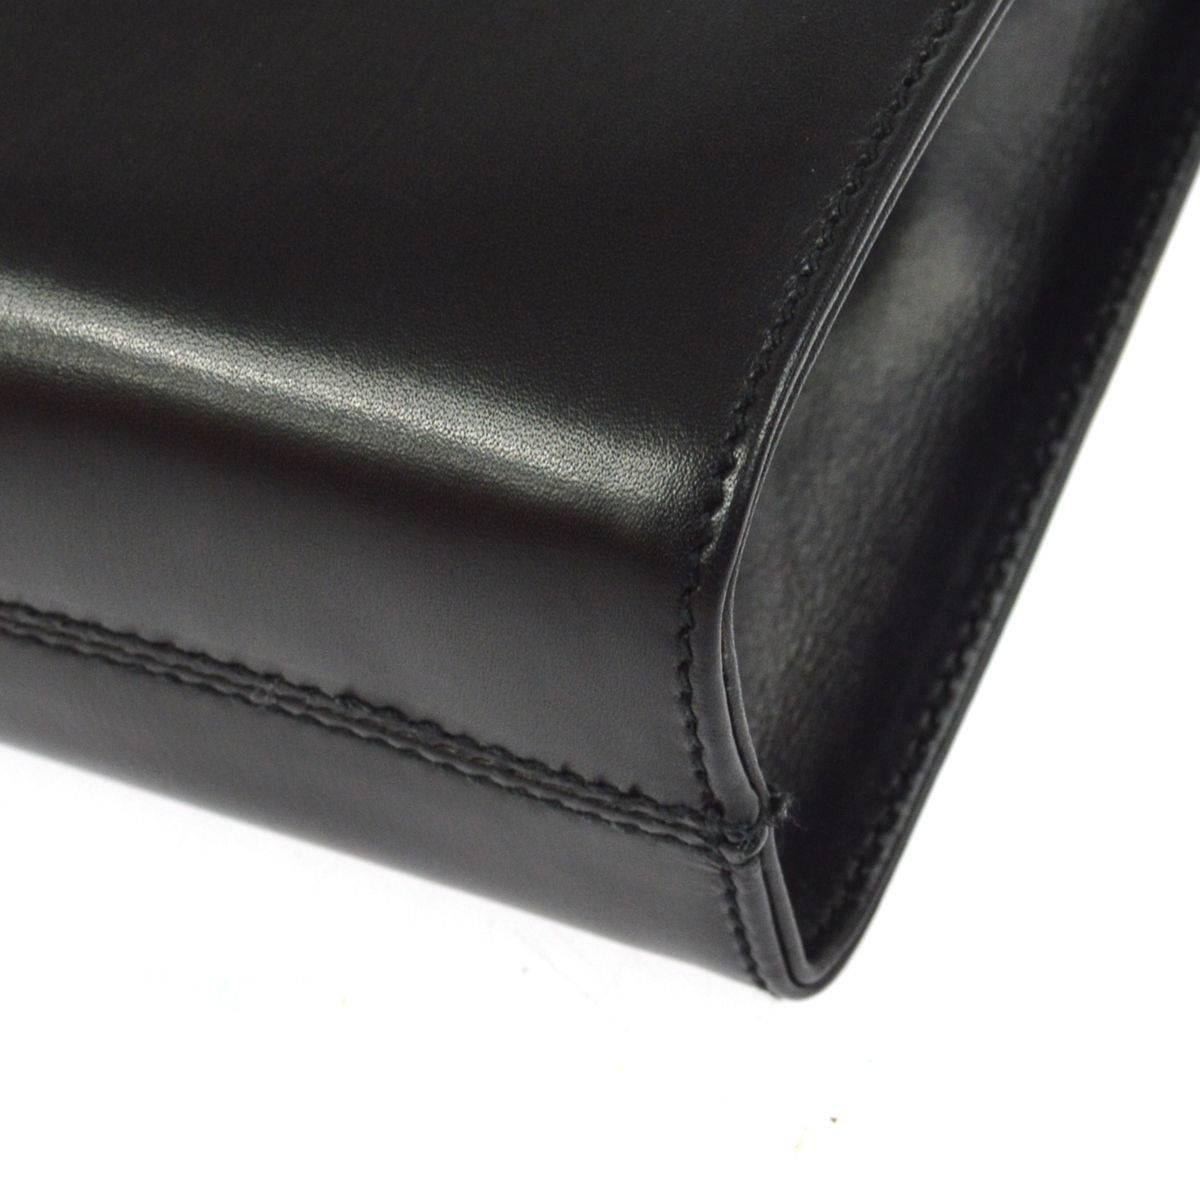 Salvatore Ferragamo Black Leather Envelope 2 in 1 Clutch Flap Shoulder Bag 2